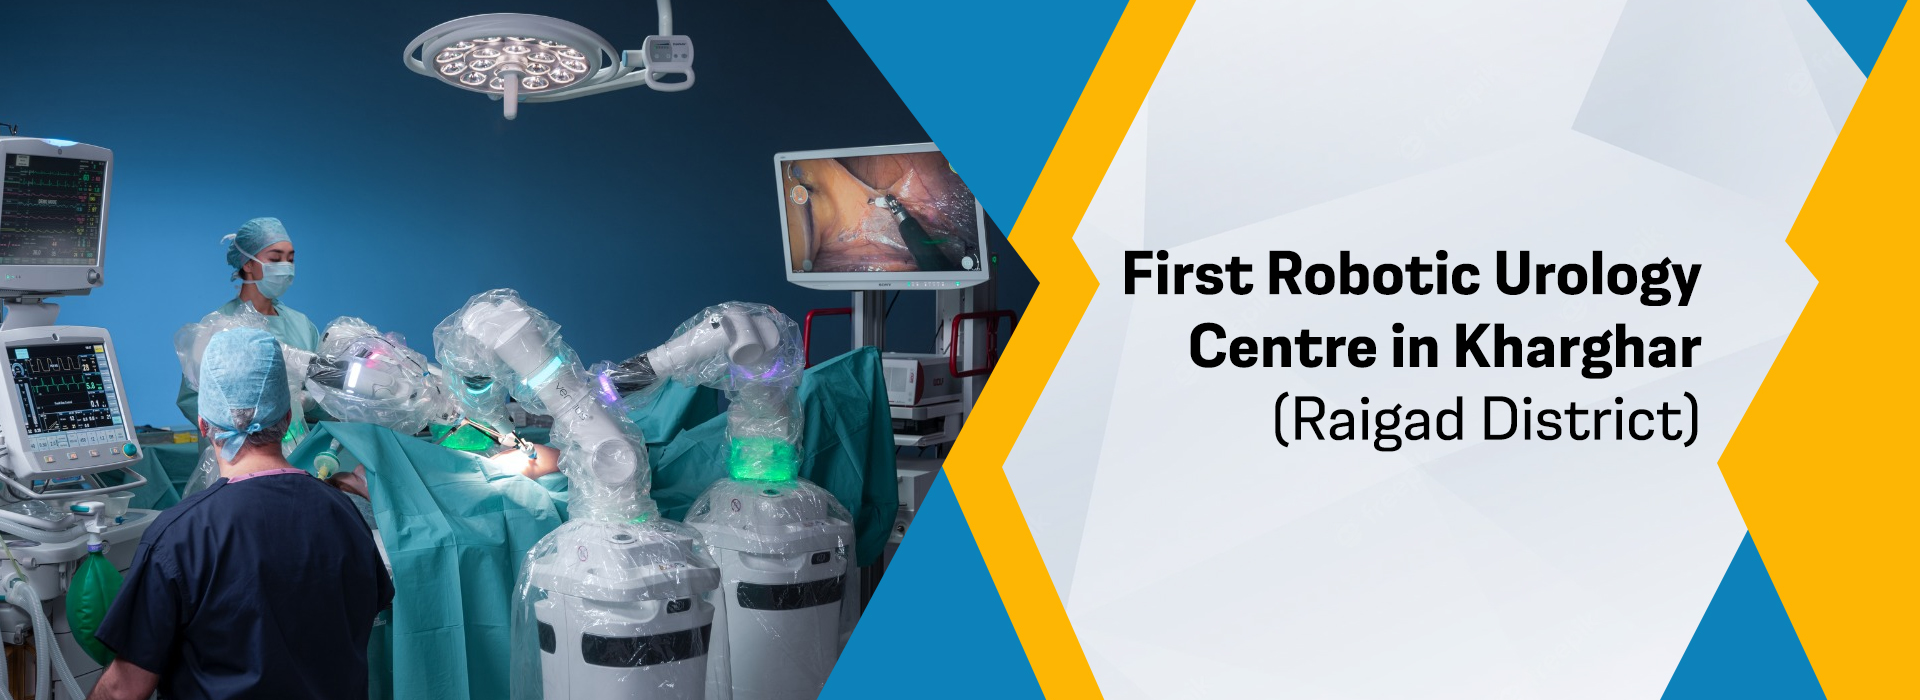 First robotic urology centre in kharghar raigad district at MITR Urology Associates and Hospital in Navi Mumbai, with centres at Panvel, Kharghar, Ulwe, and Vashi.